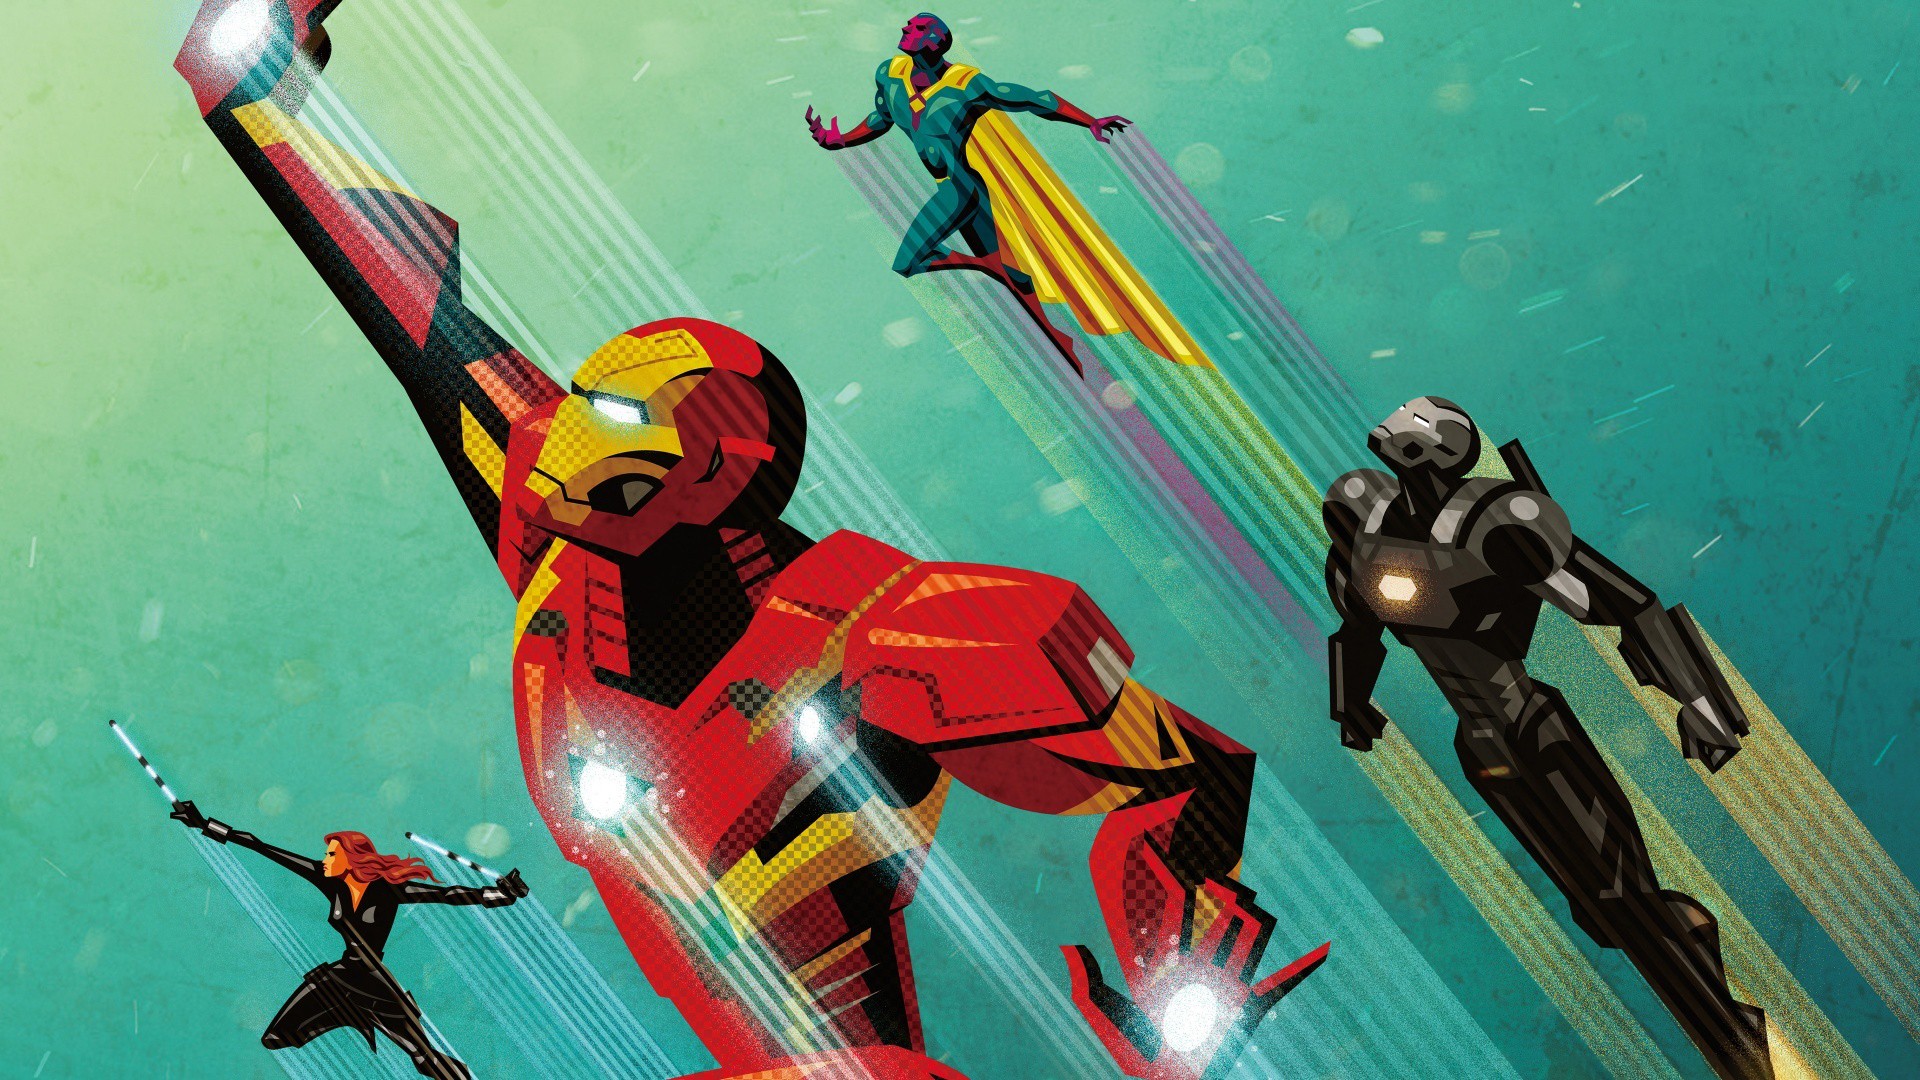 General 1920x1080 Marvel Heroes Captain America: Civil War artwork Iron Man The Avengers superhero